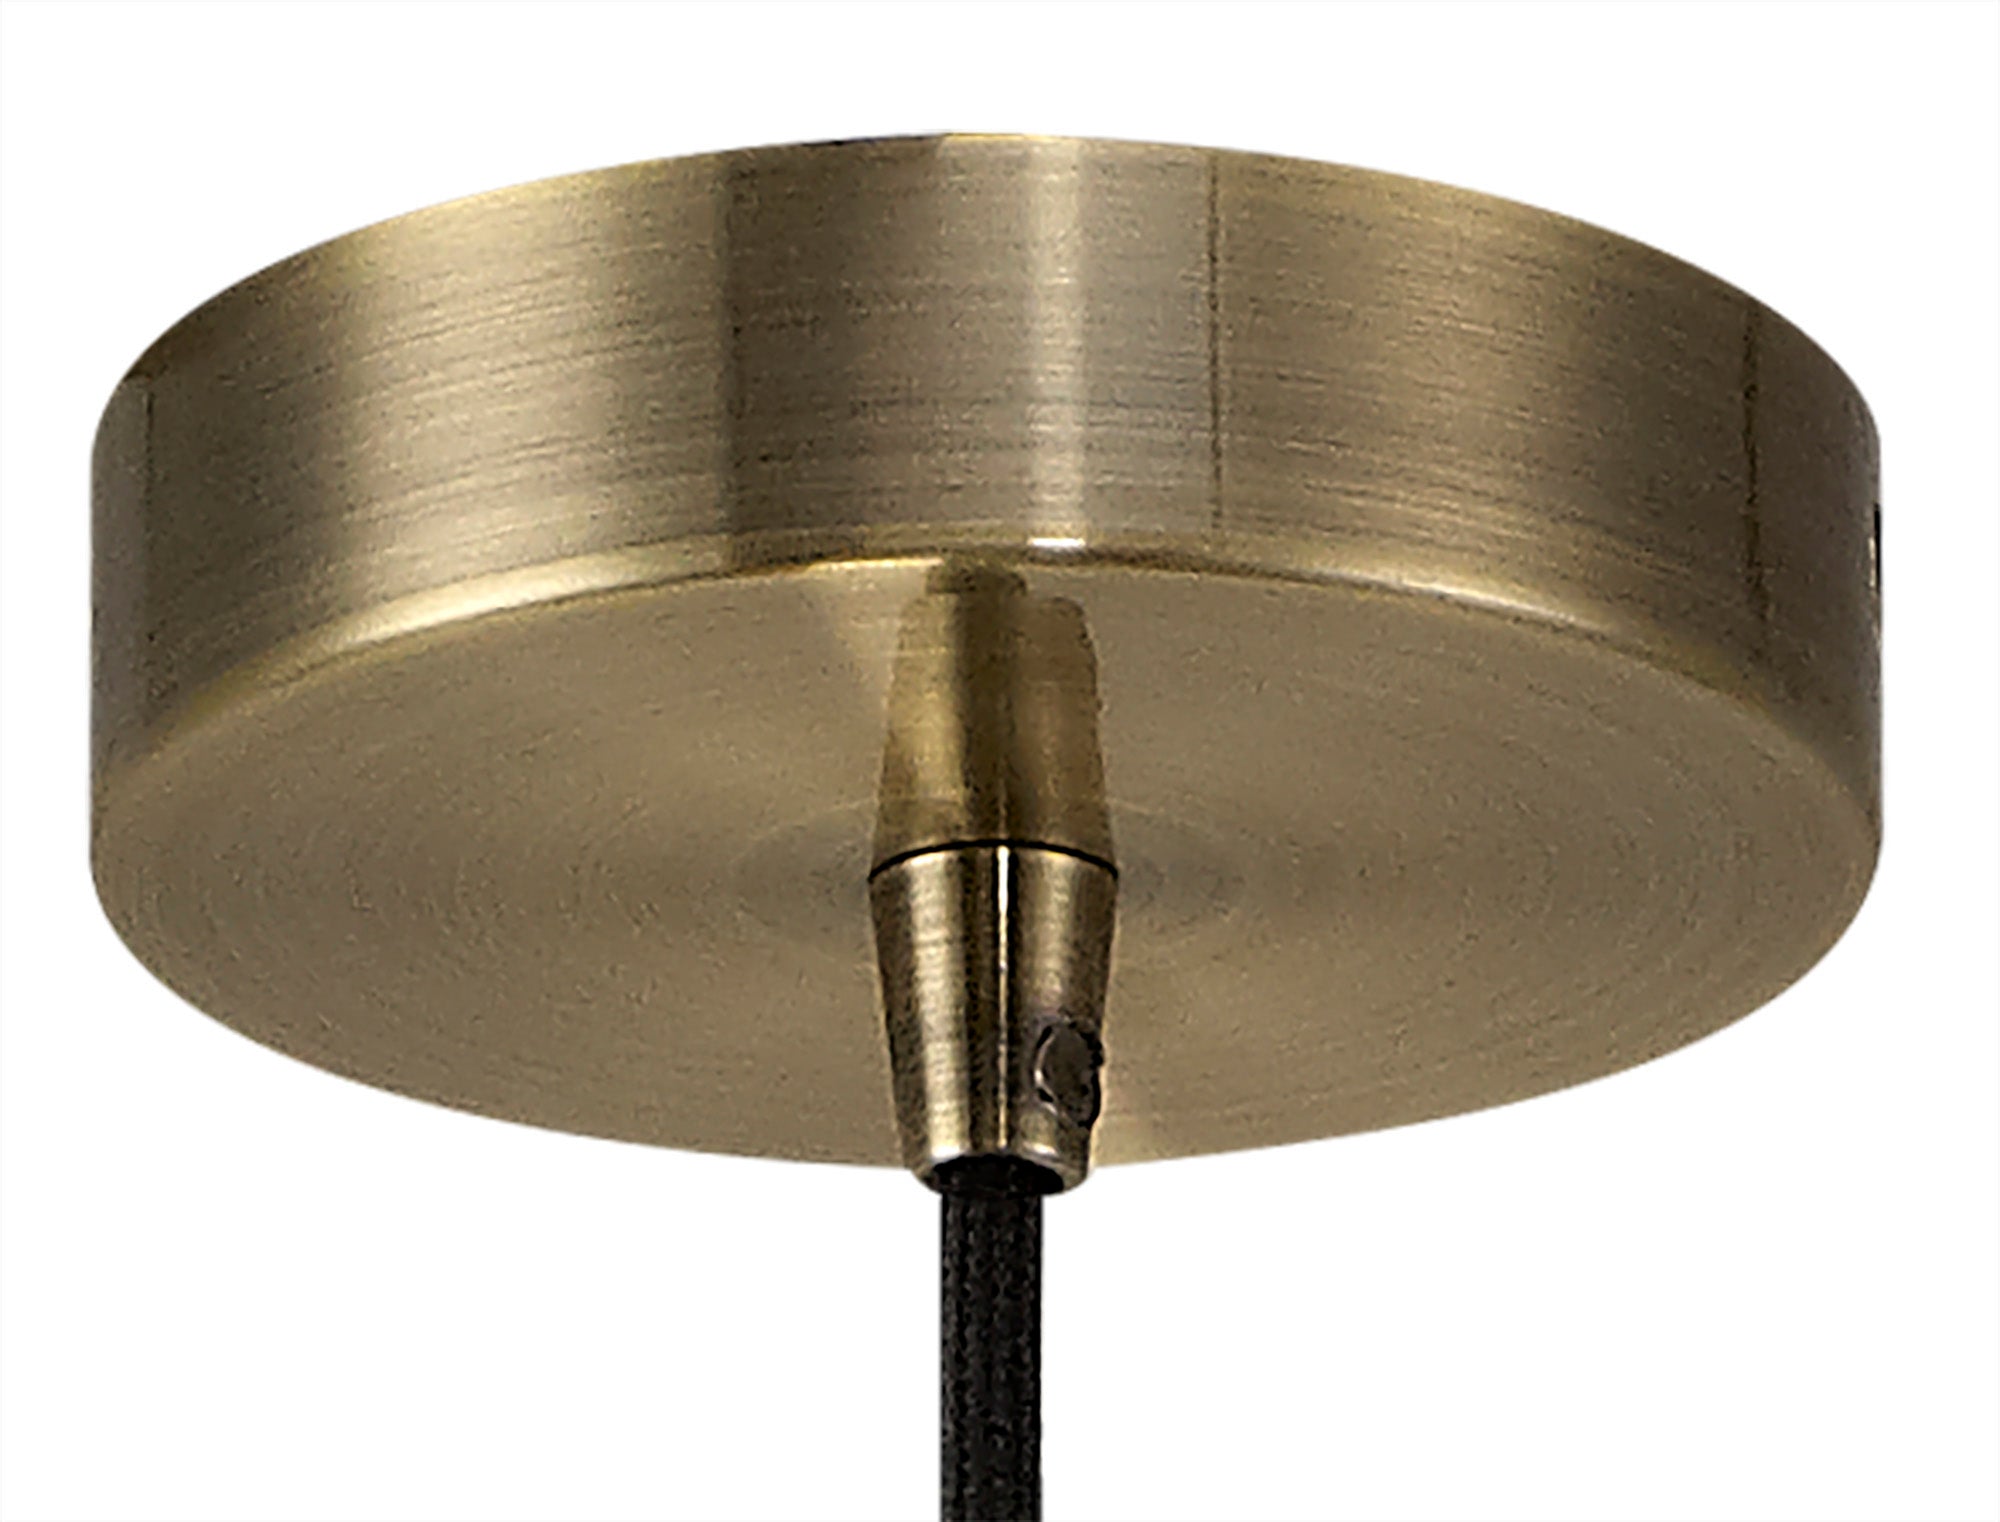 Arpeta 1m Suspension Kit 1 Light Antique Brass/Black Braided Cable, E27 Max 60W, c/w Ceiling Bracket